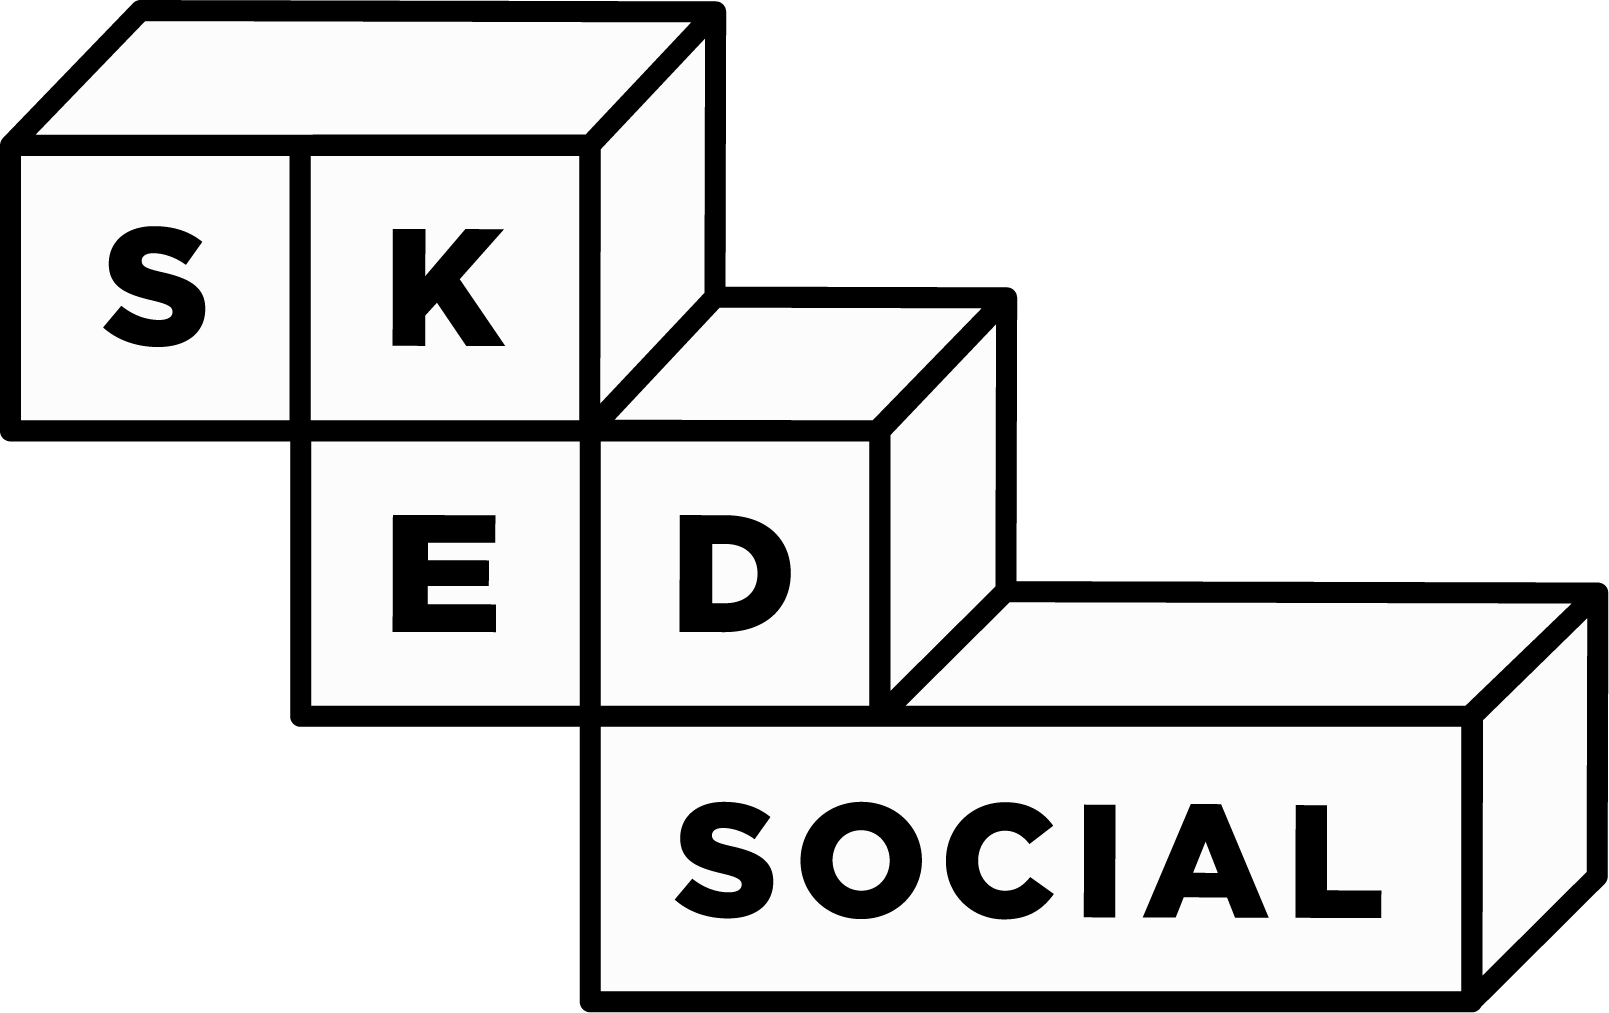 Sked logo